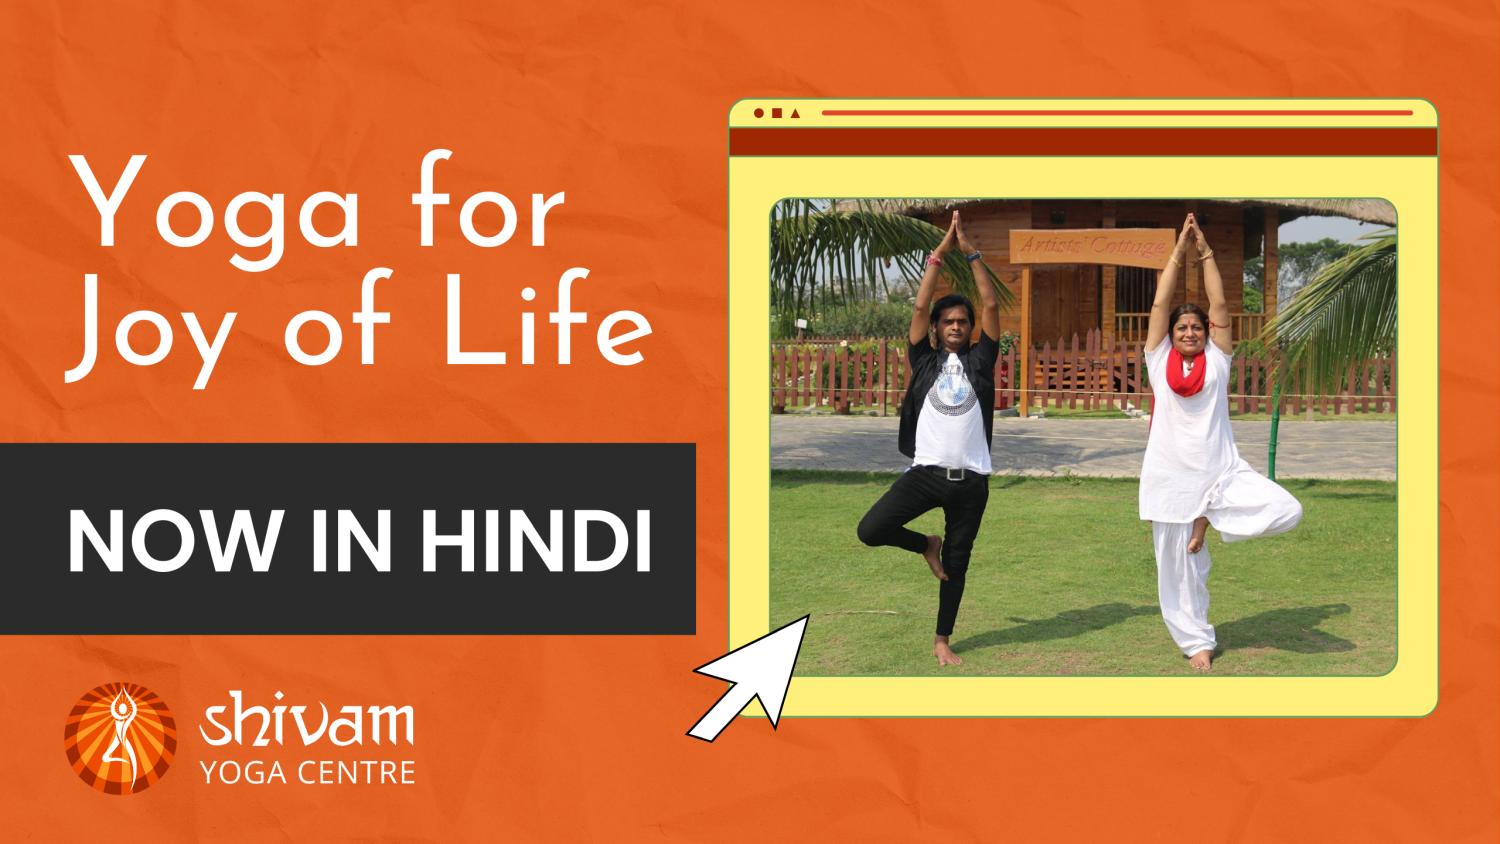 Yoga for Joy of Life blog monthly event - Shivam Yoga Centre